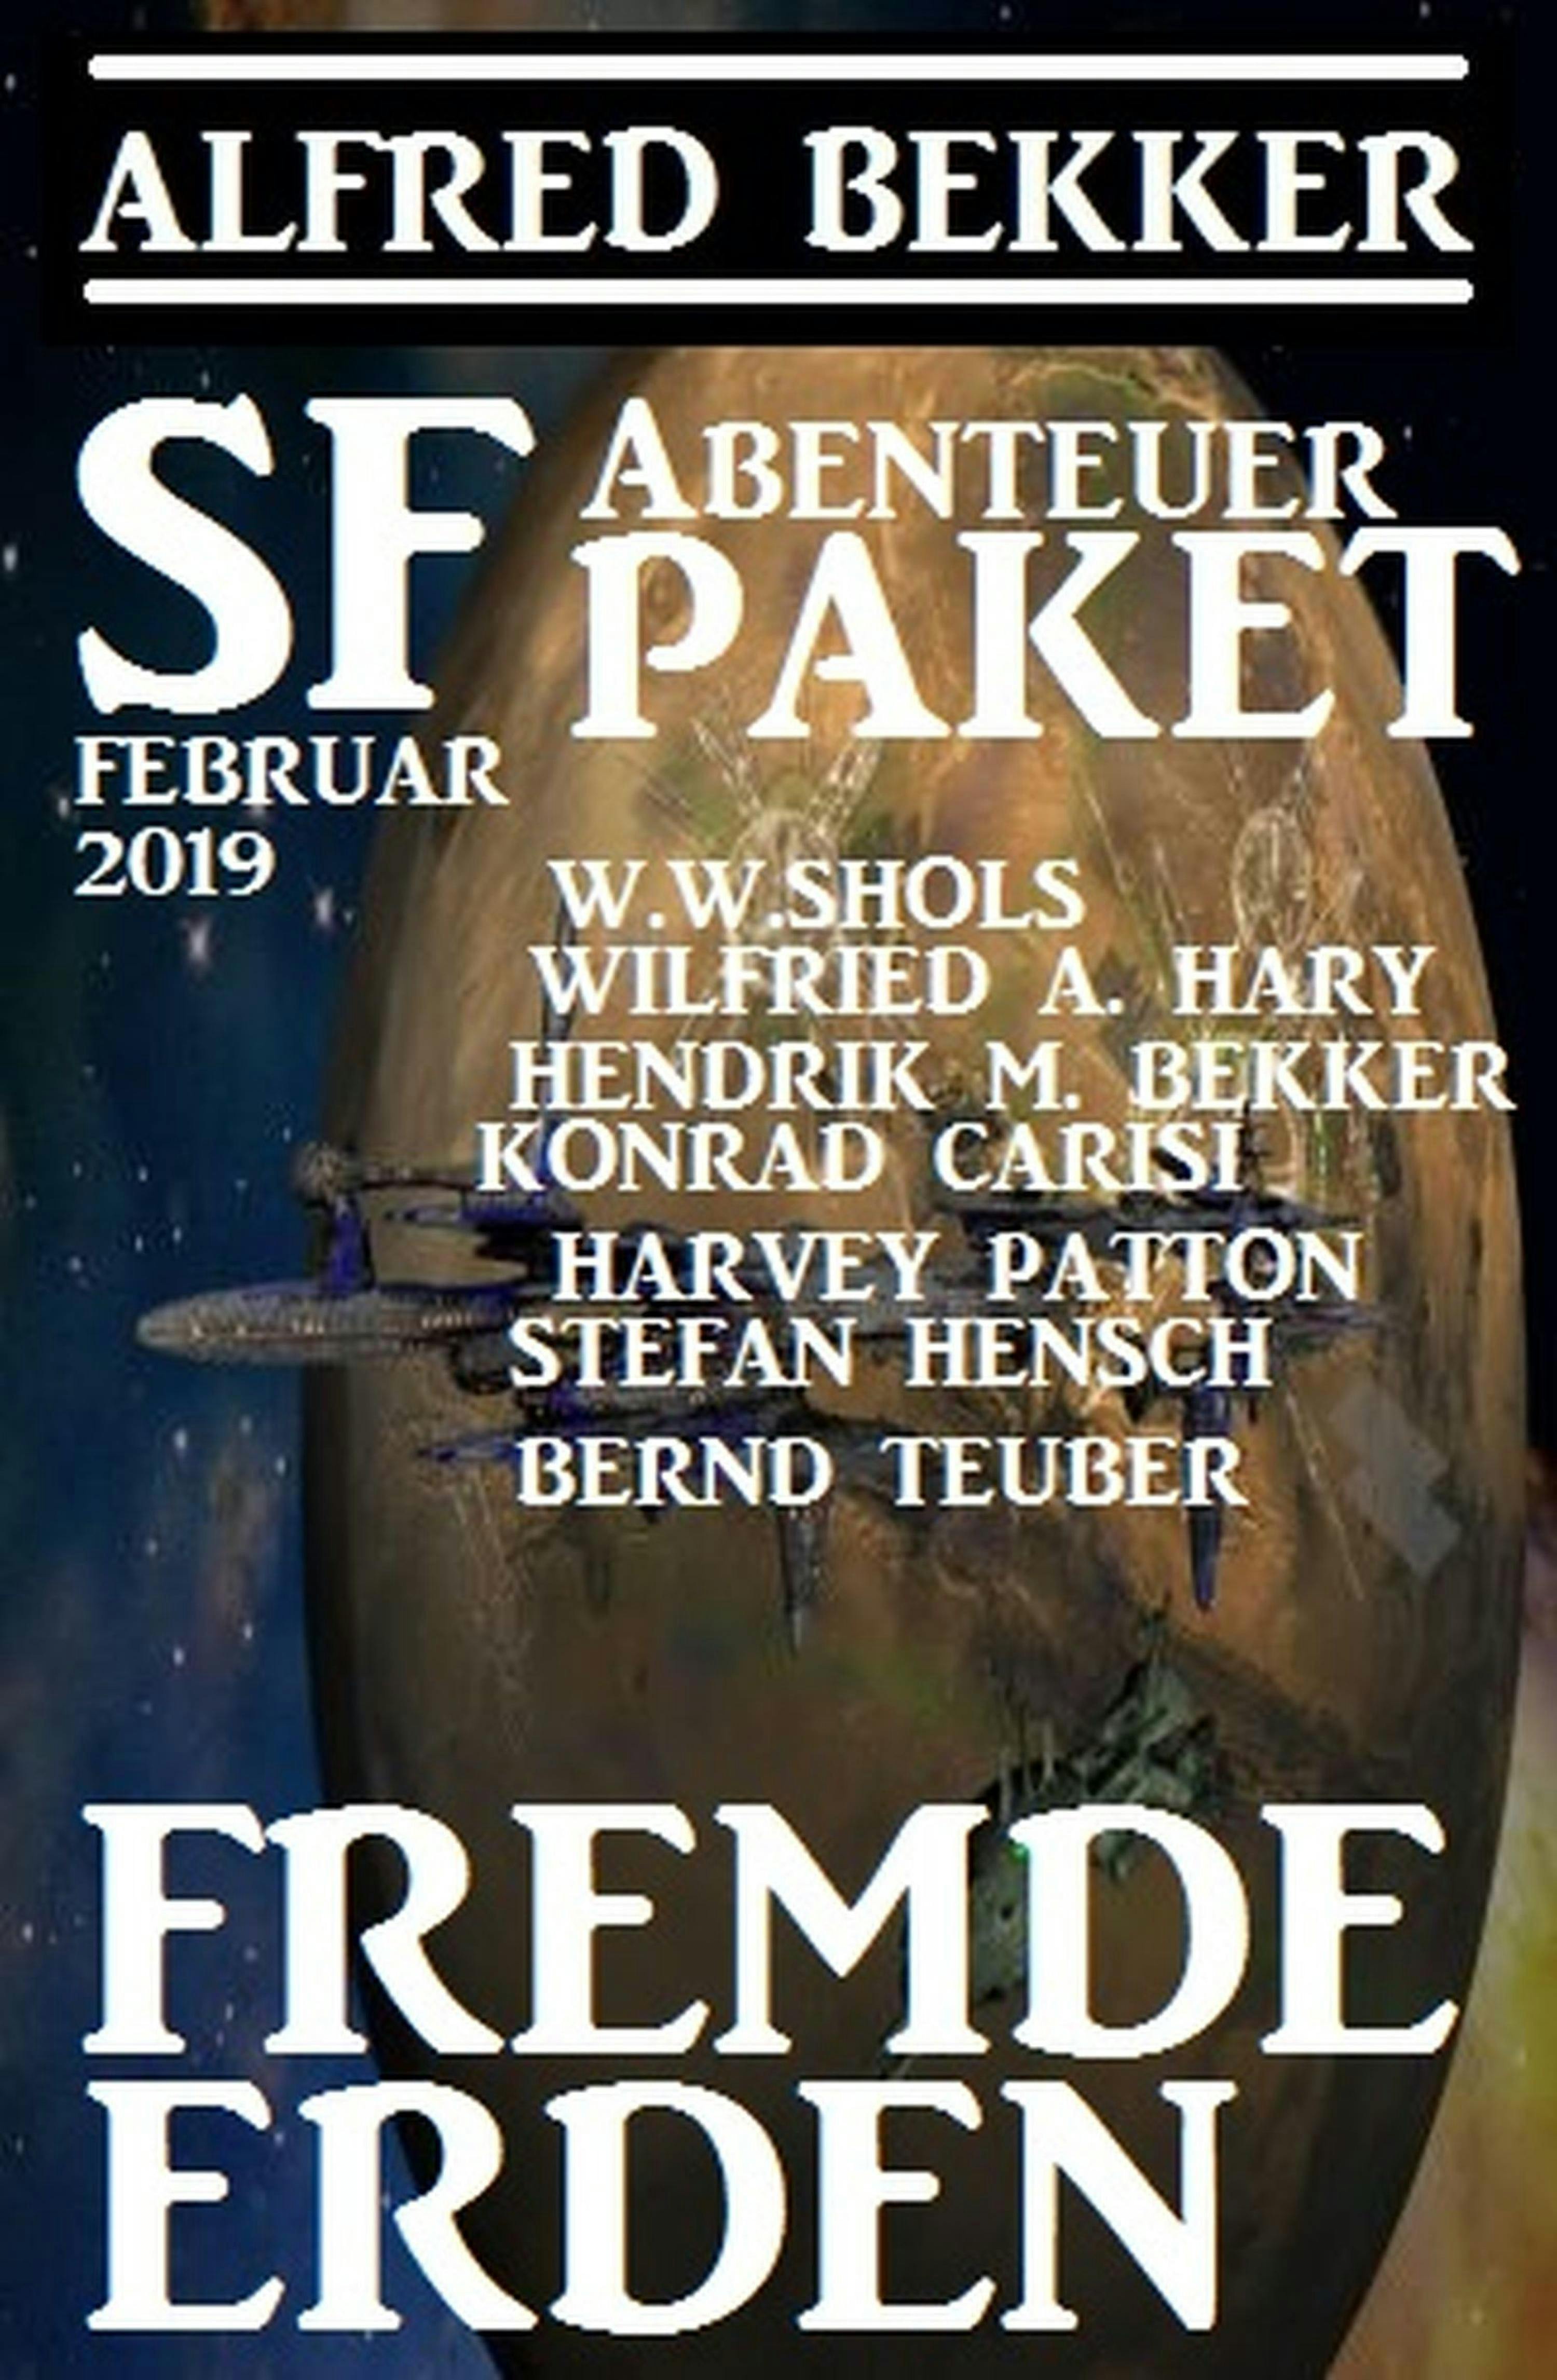 SF-Abenteuer Paket Februar 2019: Fremde Erden - Alfred Bekker, Wilfried A. Hary, Stefan Hensch, W. W. Shols, Bernd Teuber, Hendrik M. Bekker, Harvey Patton, Konrad Carisi